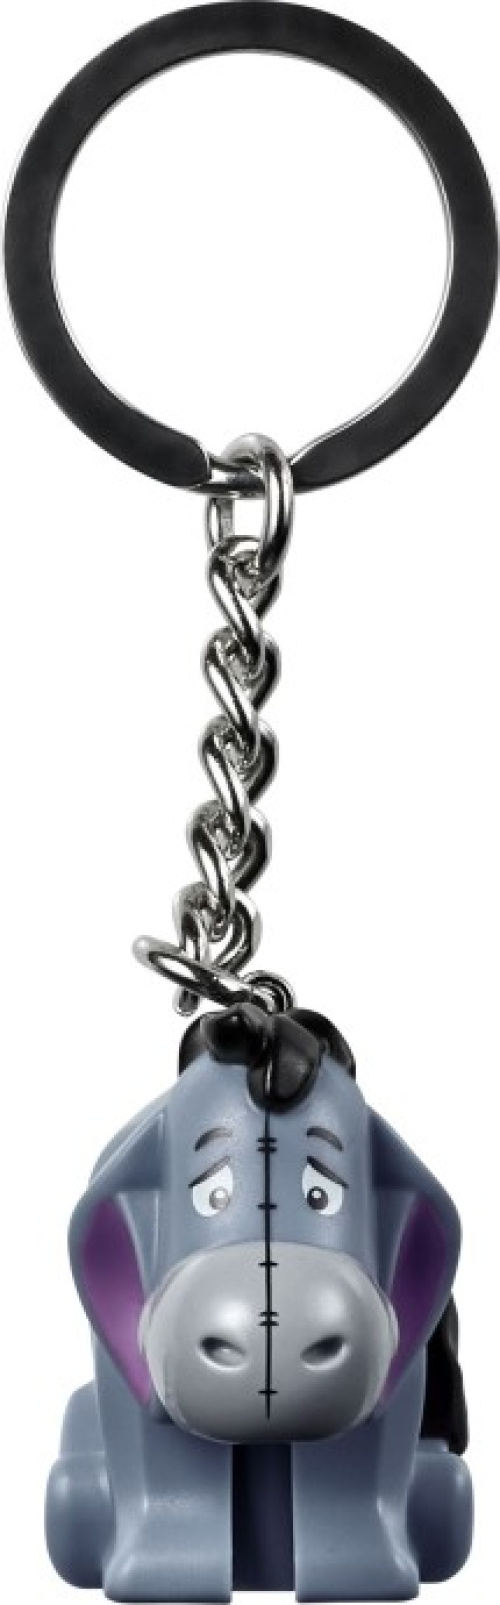 854203-1 Eeyore Key Chain